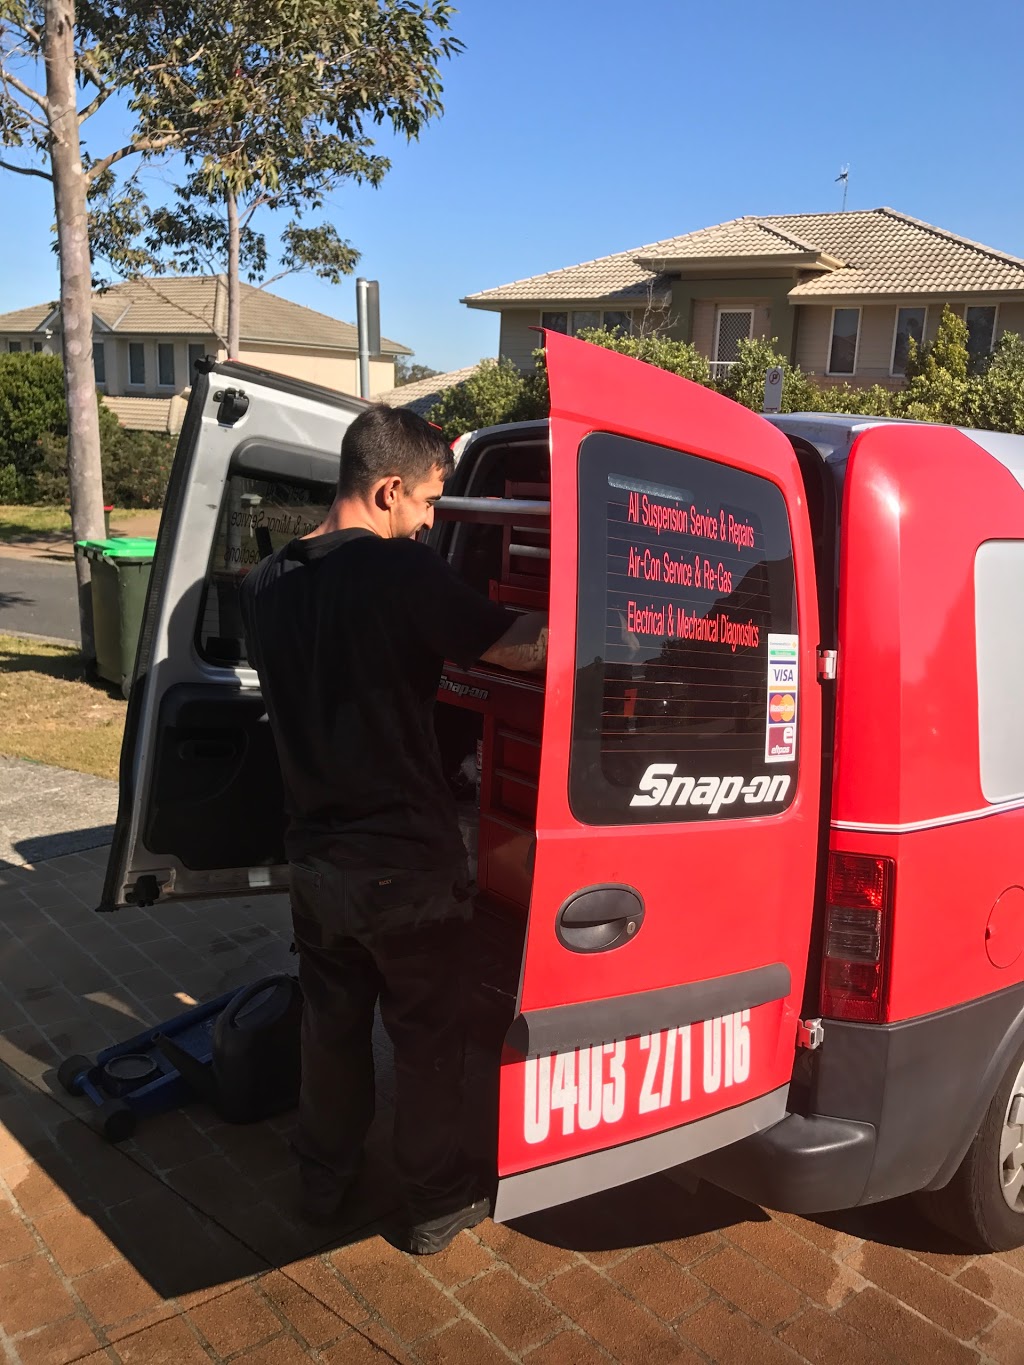 All Service Mobile Automotive | car repair | 6/16 Mayfair Cl, Morisset NSW 2264, Australia | 0403271016 OR +61 403 271 016